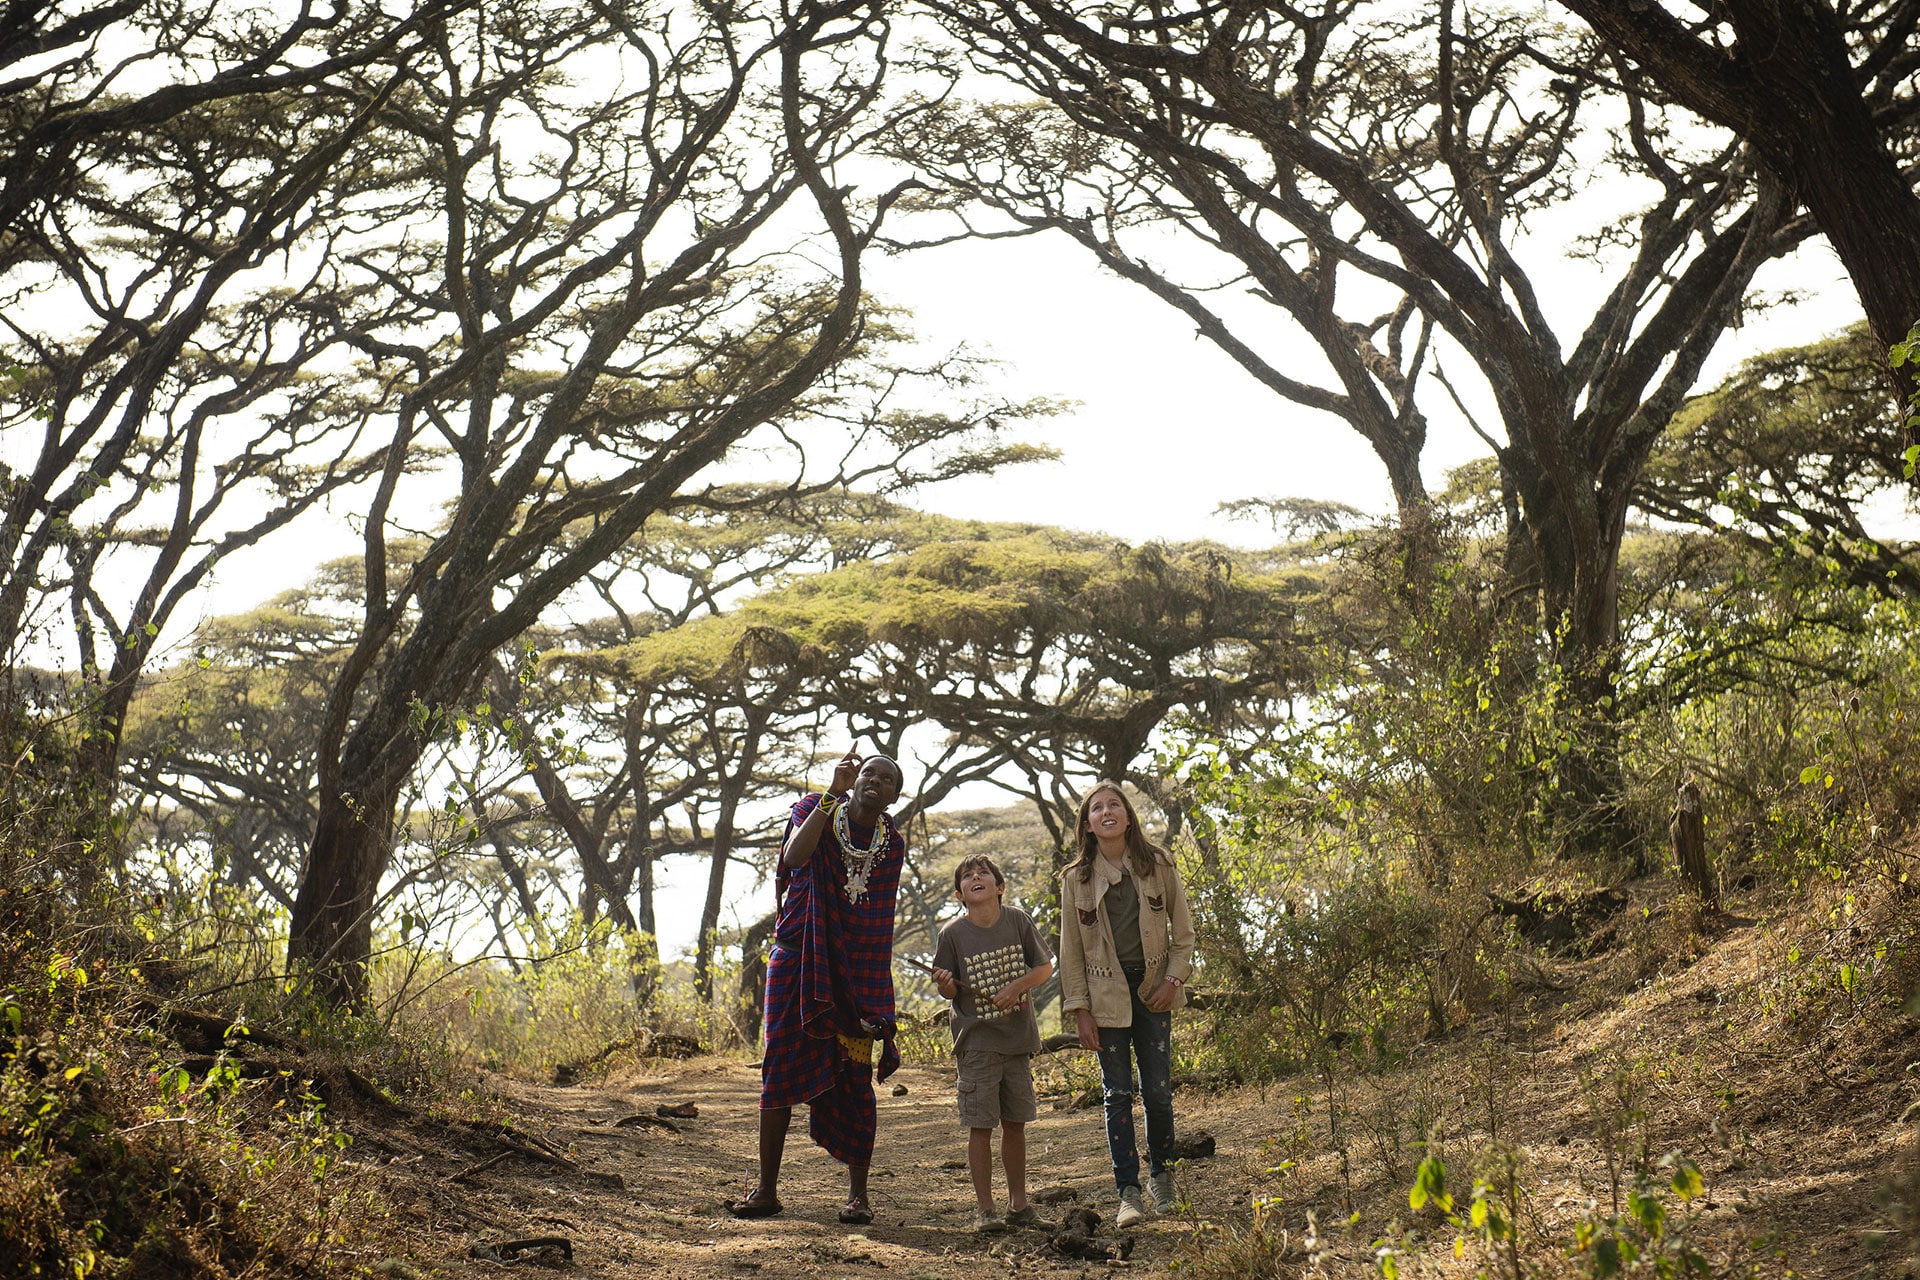 Guided walk alongside a Maasai warrior during an African safari with children